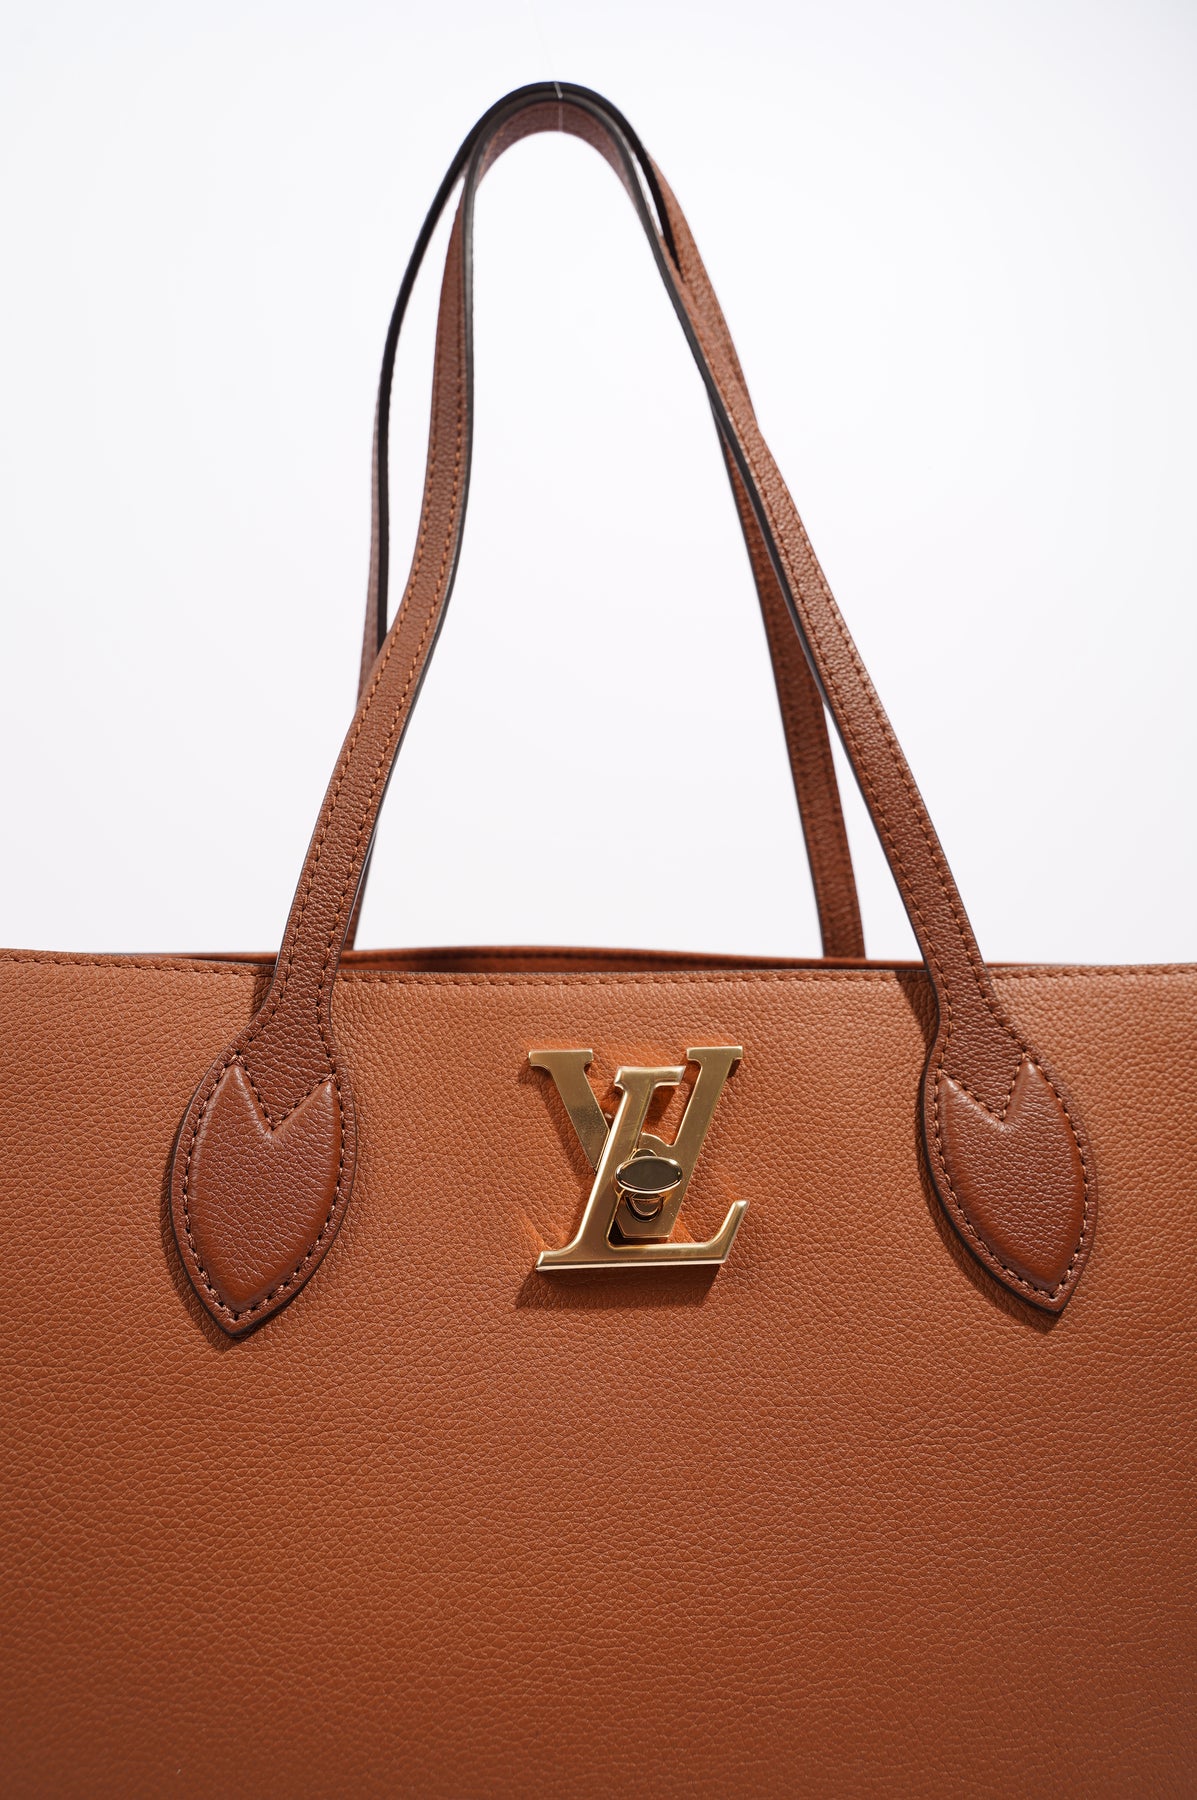 Louis Vuitton lv woman lockme backpack original leather shoulders bag